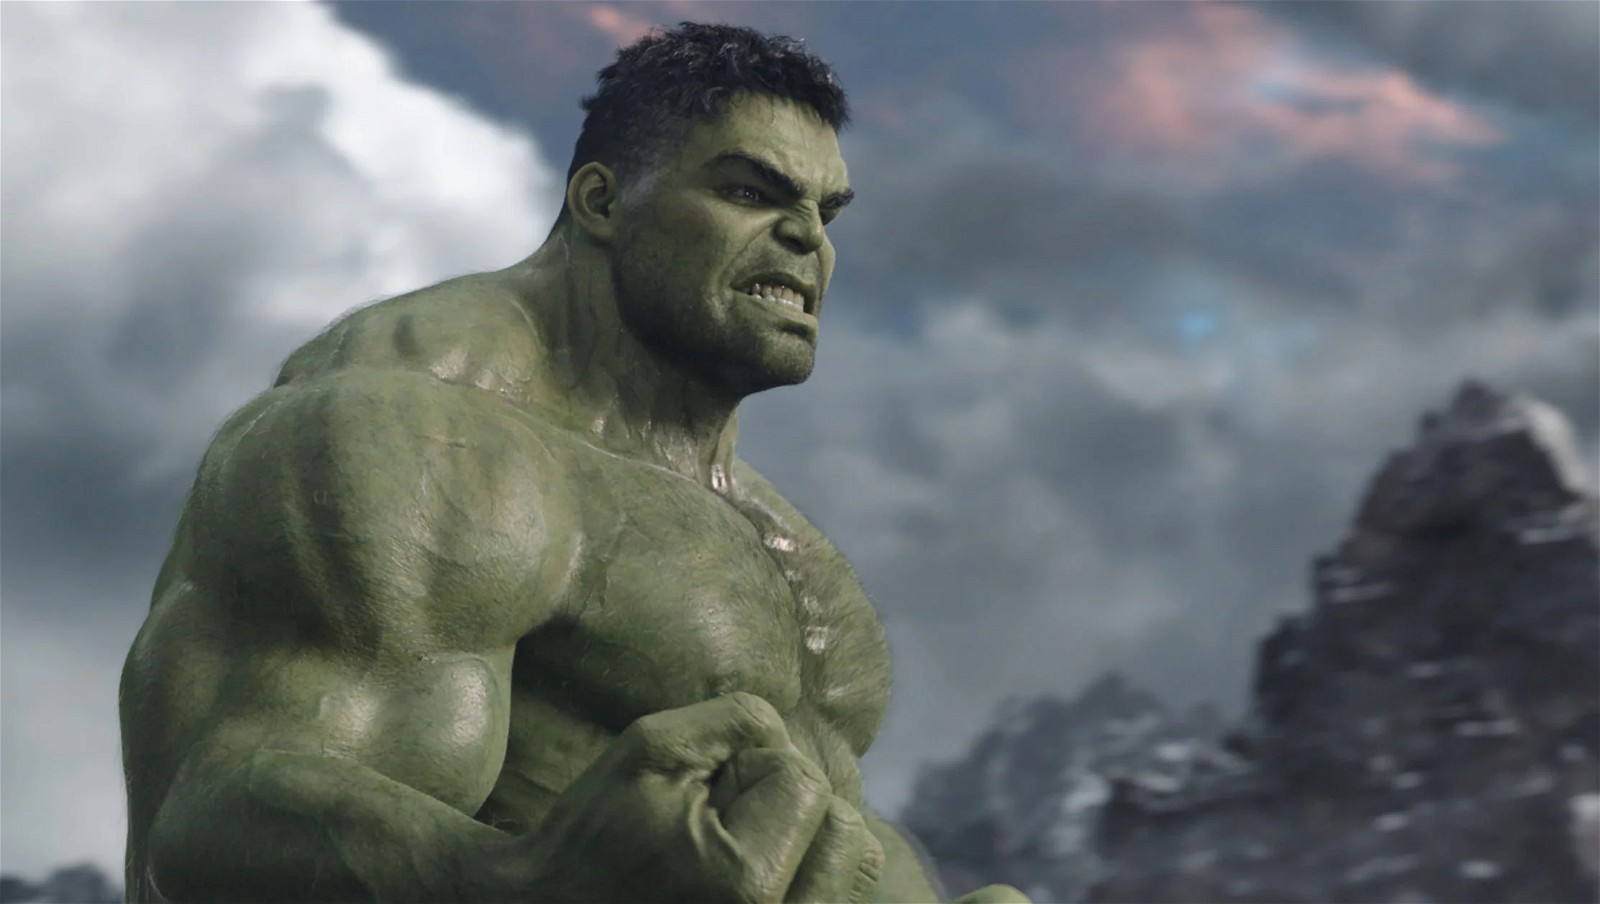 Joe Rogan unhappy with the Hulk's design